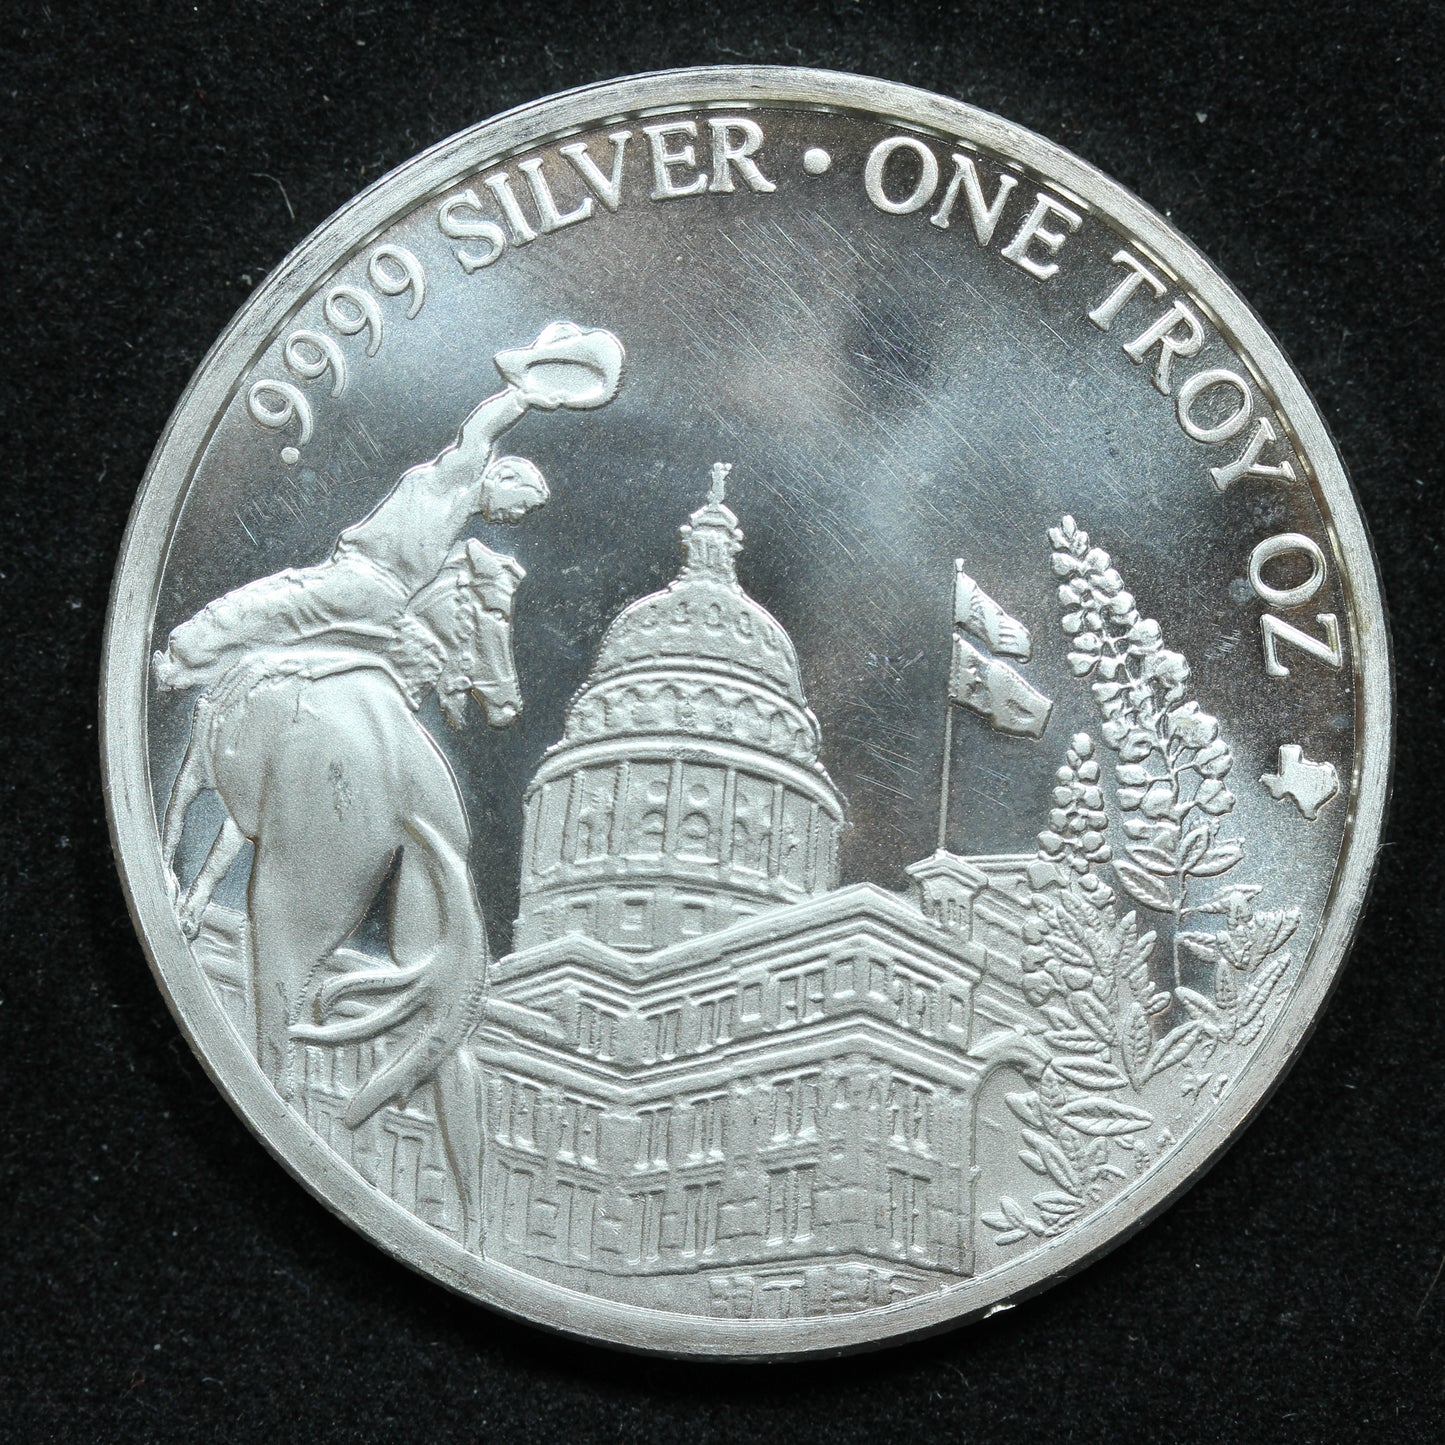 2019 1 oz .9999 Fine Silver Texas Precious Metals Silver Round - Minor Scratches